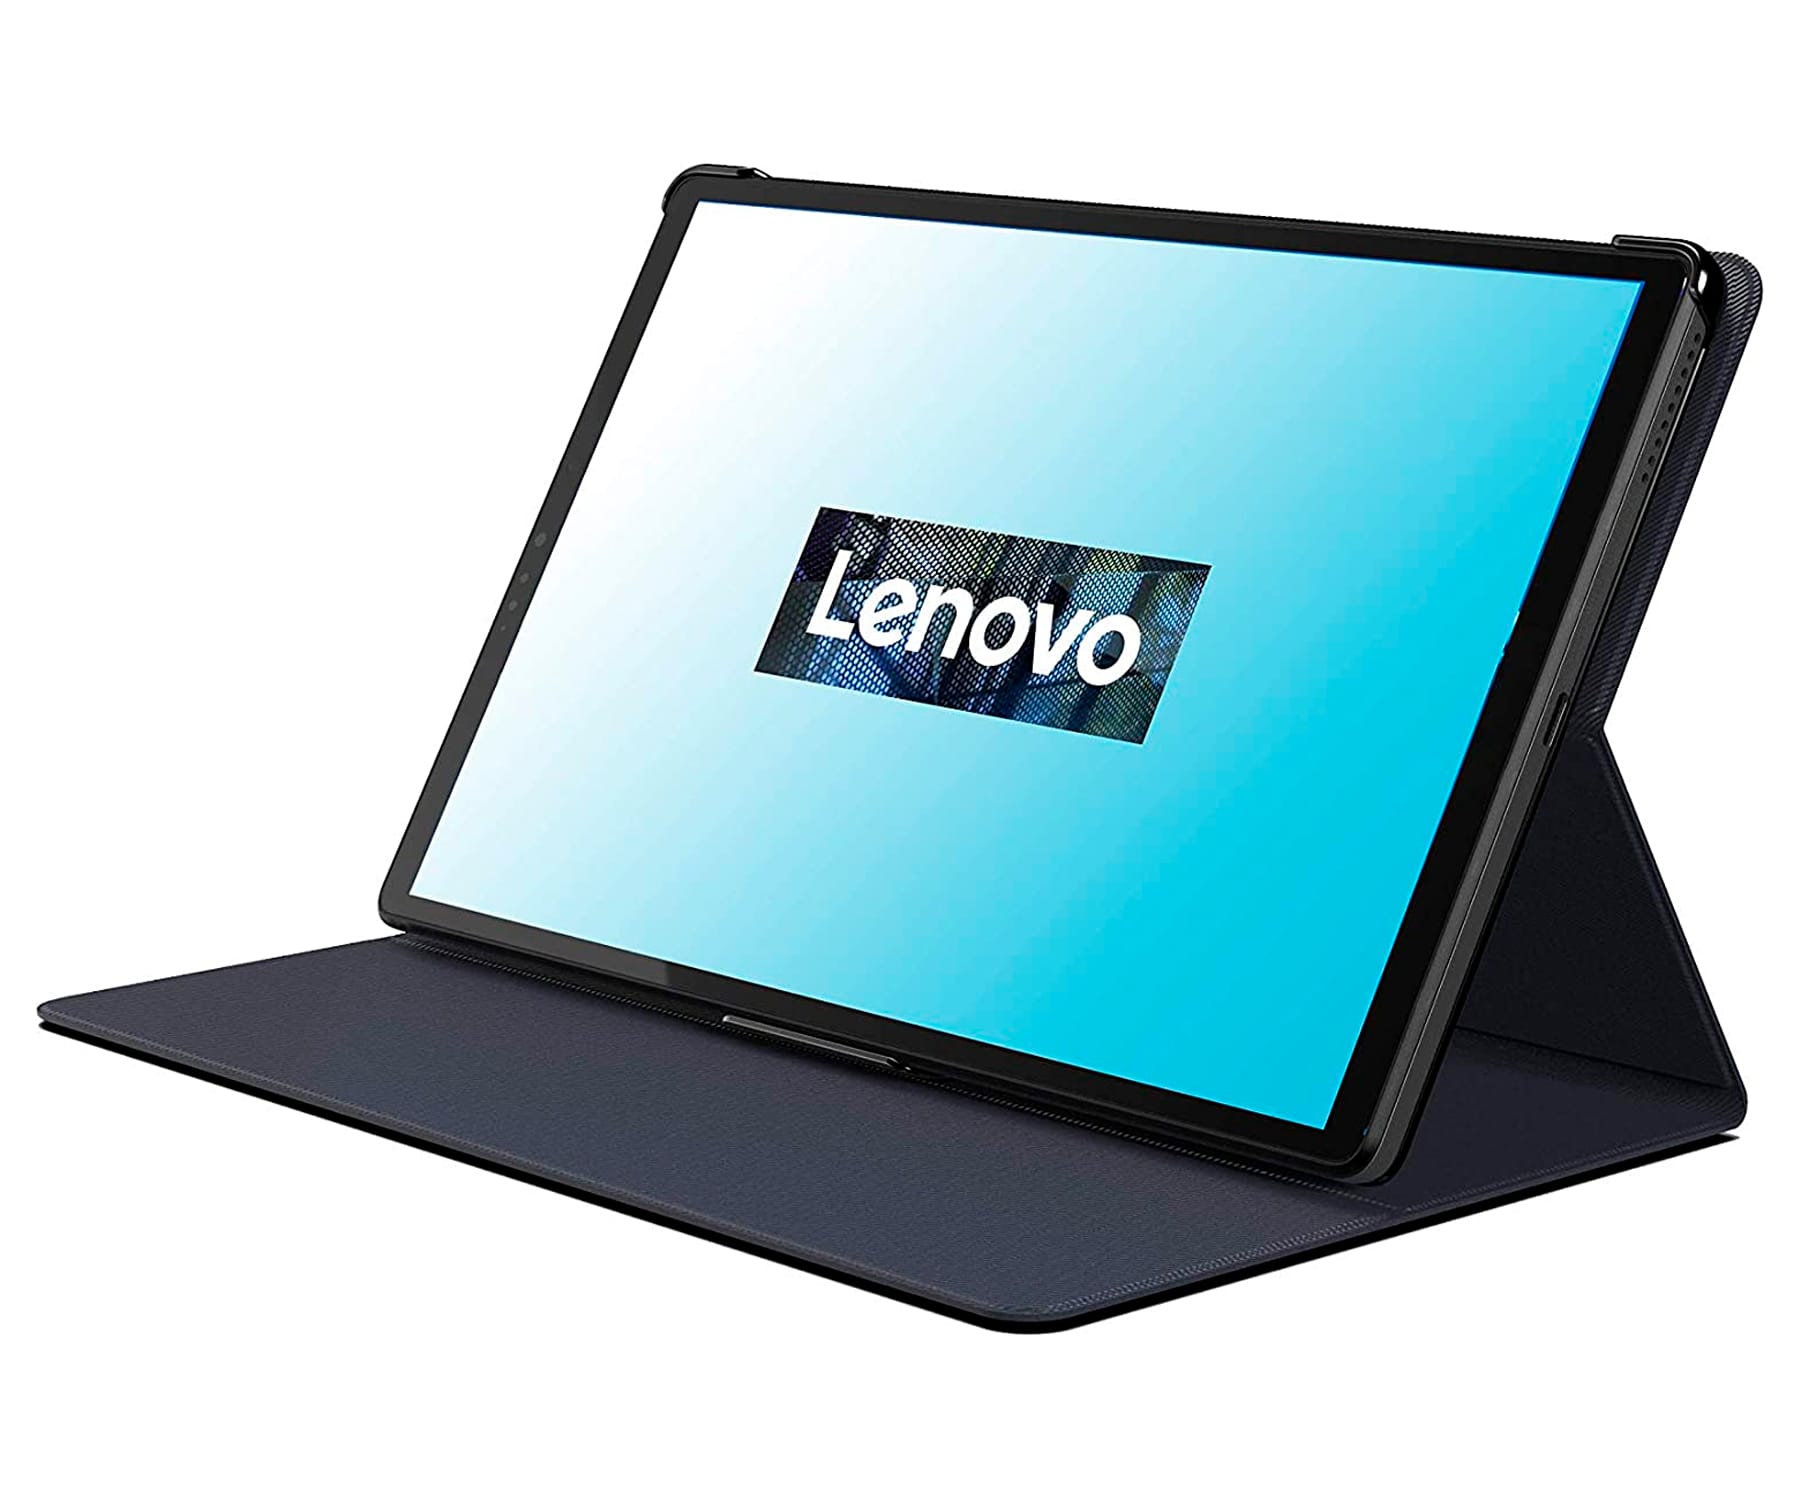 Lenovo tipo folio con stand en color negro / Funda Lenovo M10 FHD